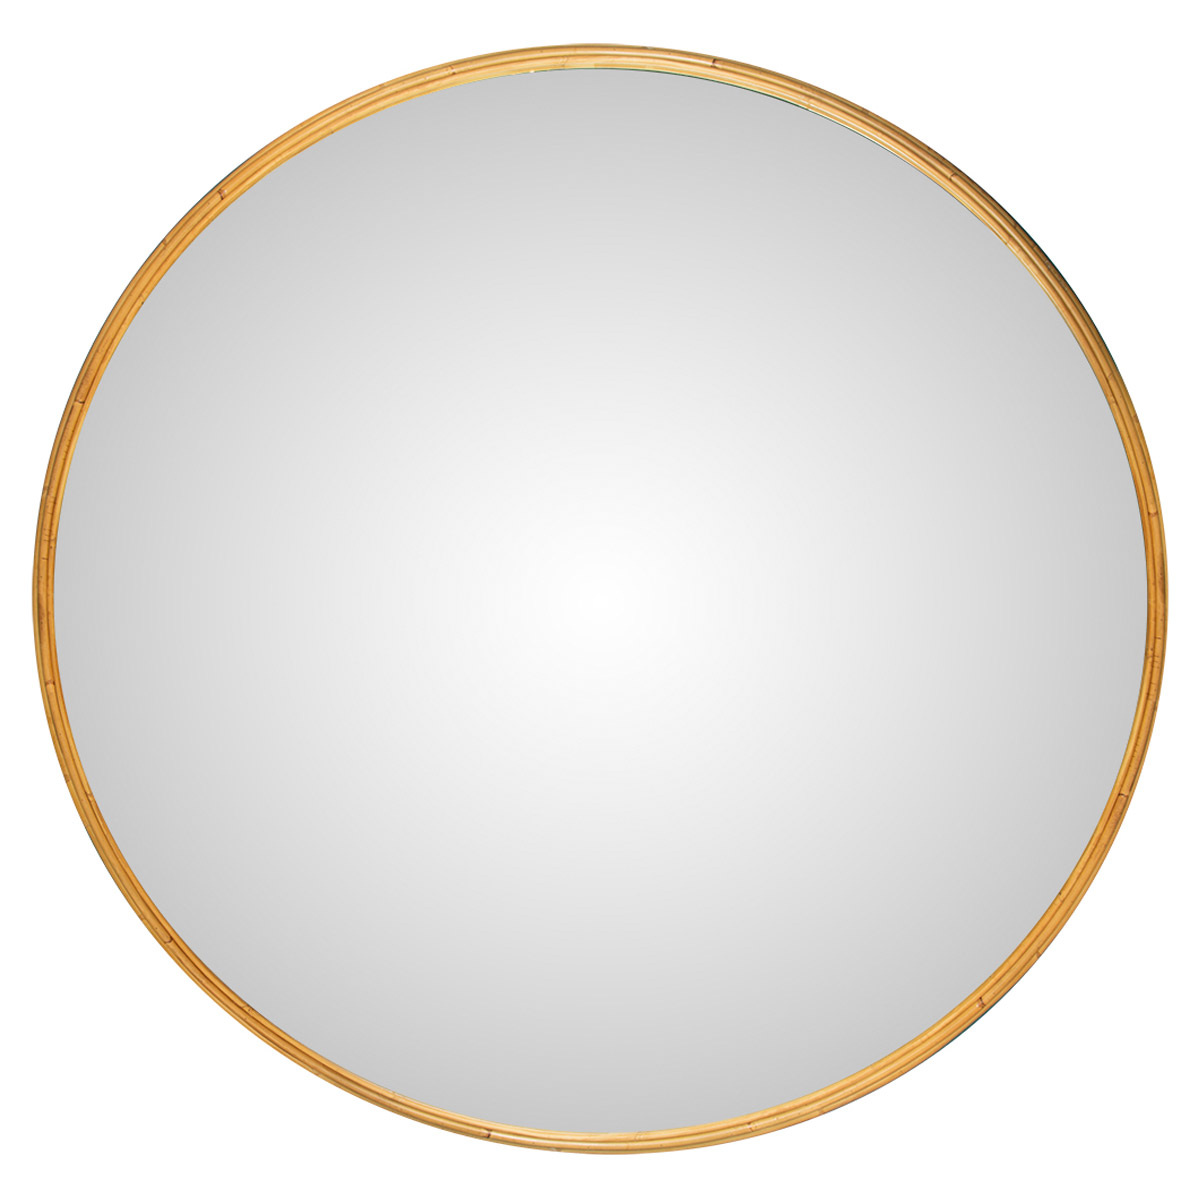 Mirror Bubble, Rattan - ø120 cm - Rattan - image 1